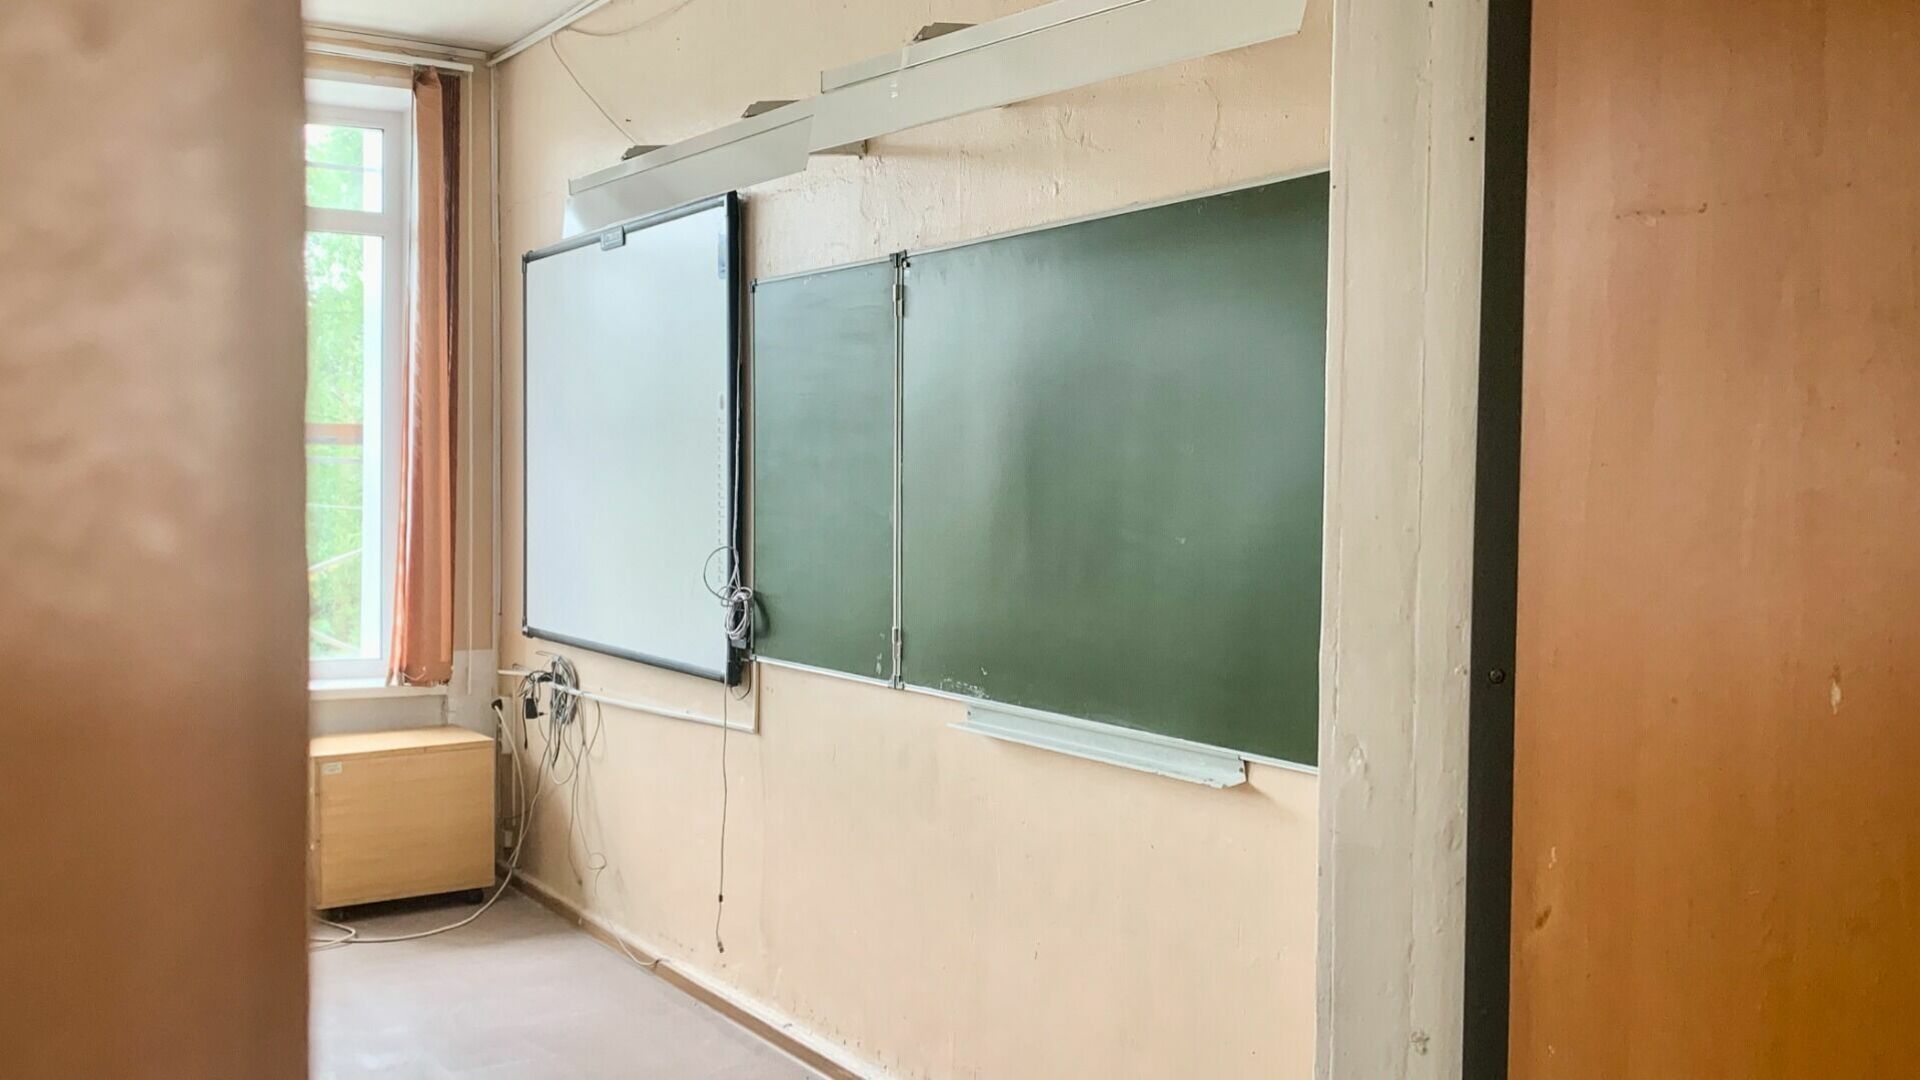 Три школы в Татарстане отремонтируют за 407 млн рублей